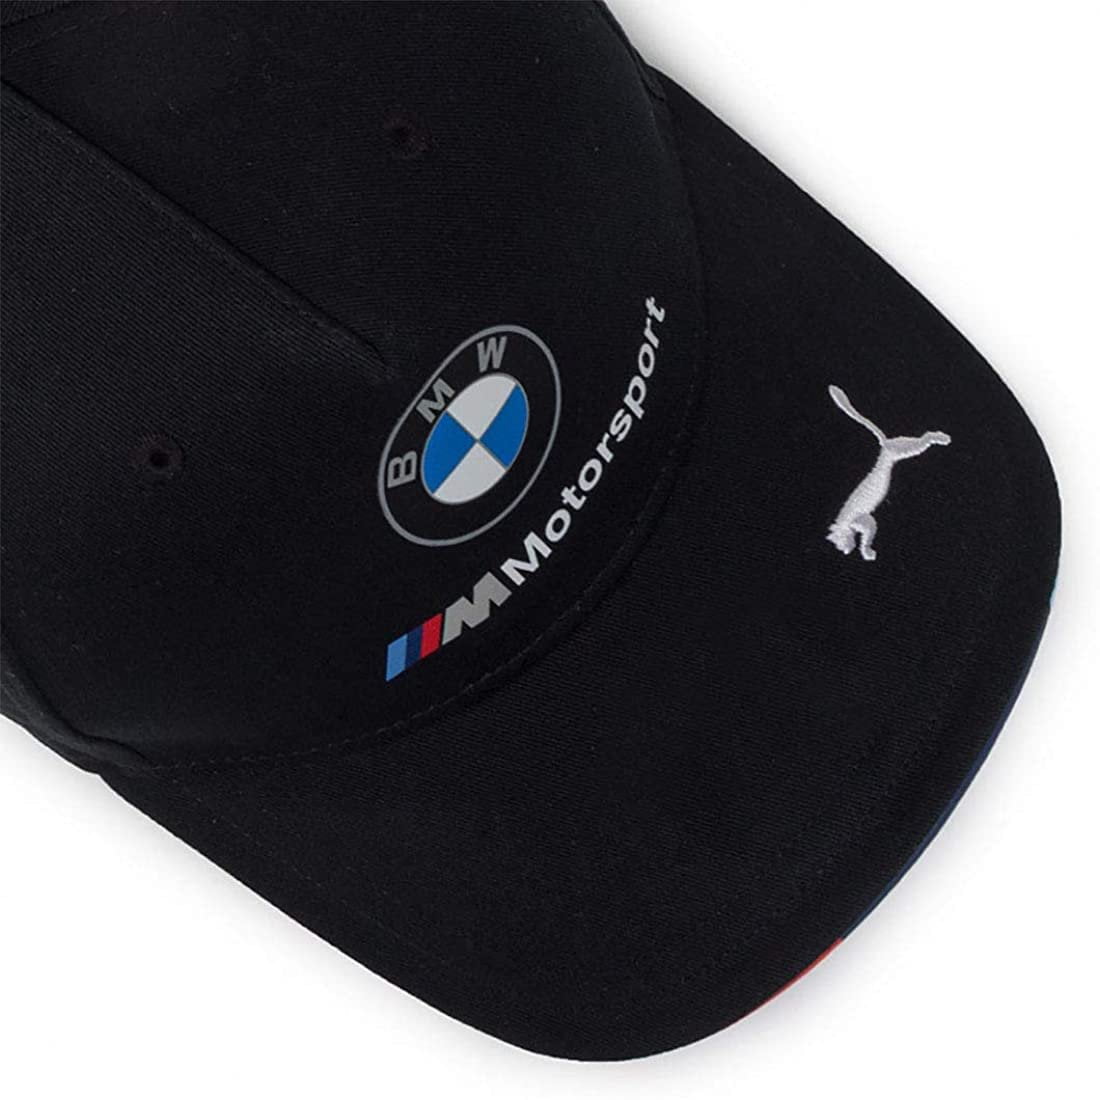 PUMA x BMW M Motorsport Team Adjustable Snapback Baseball Cap Hat Black